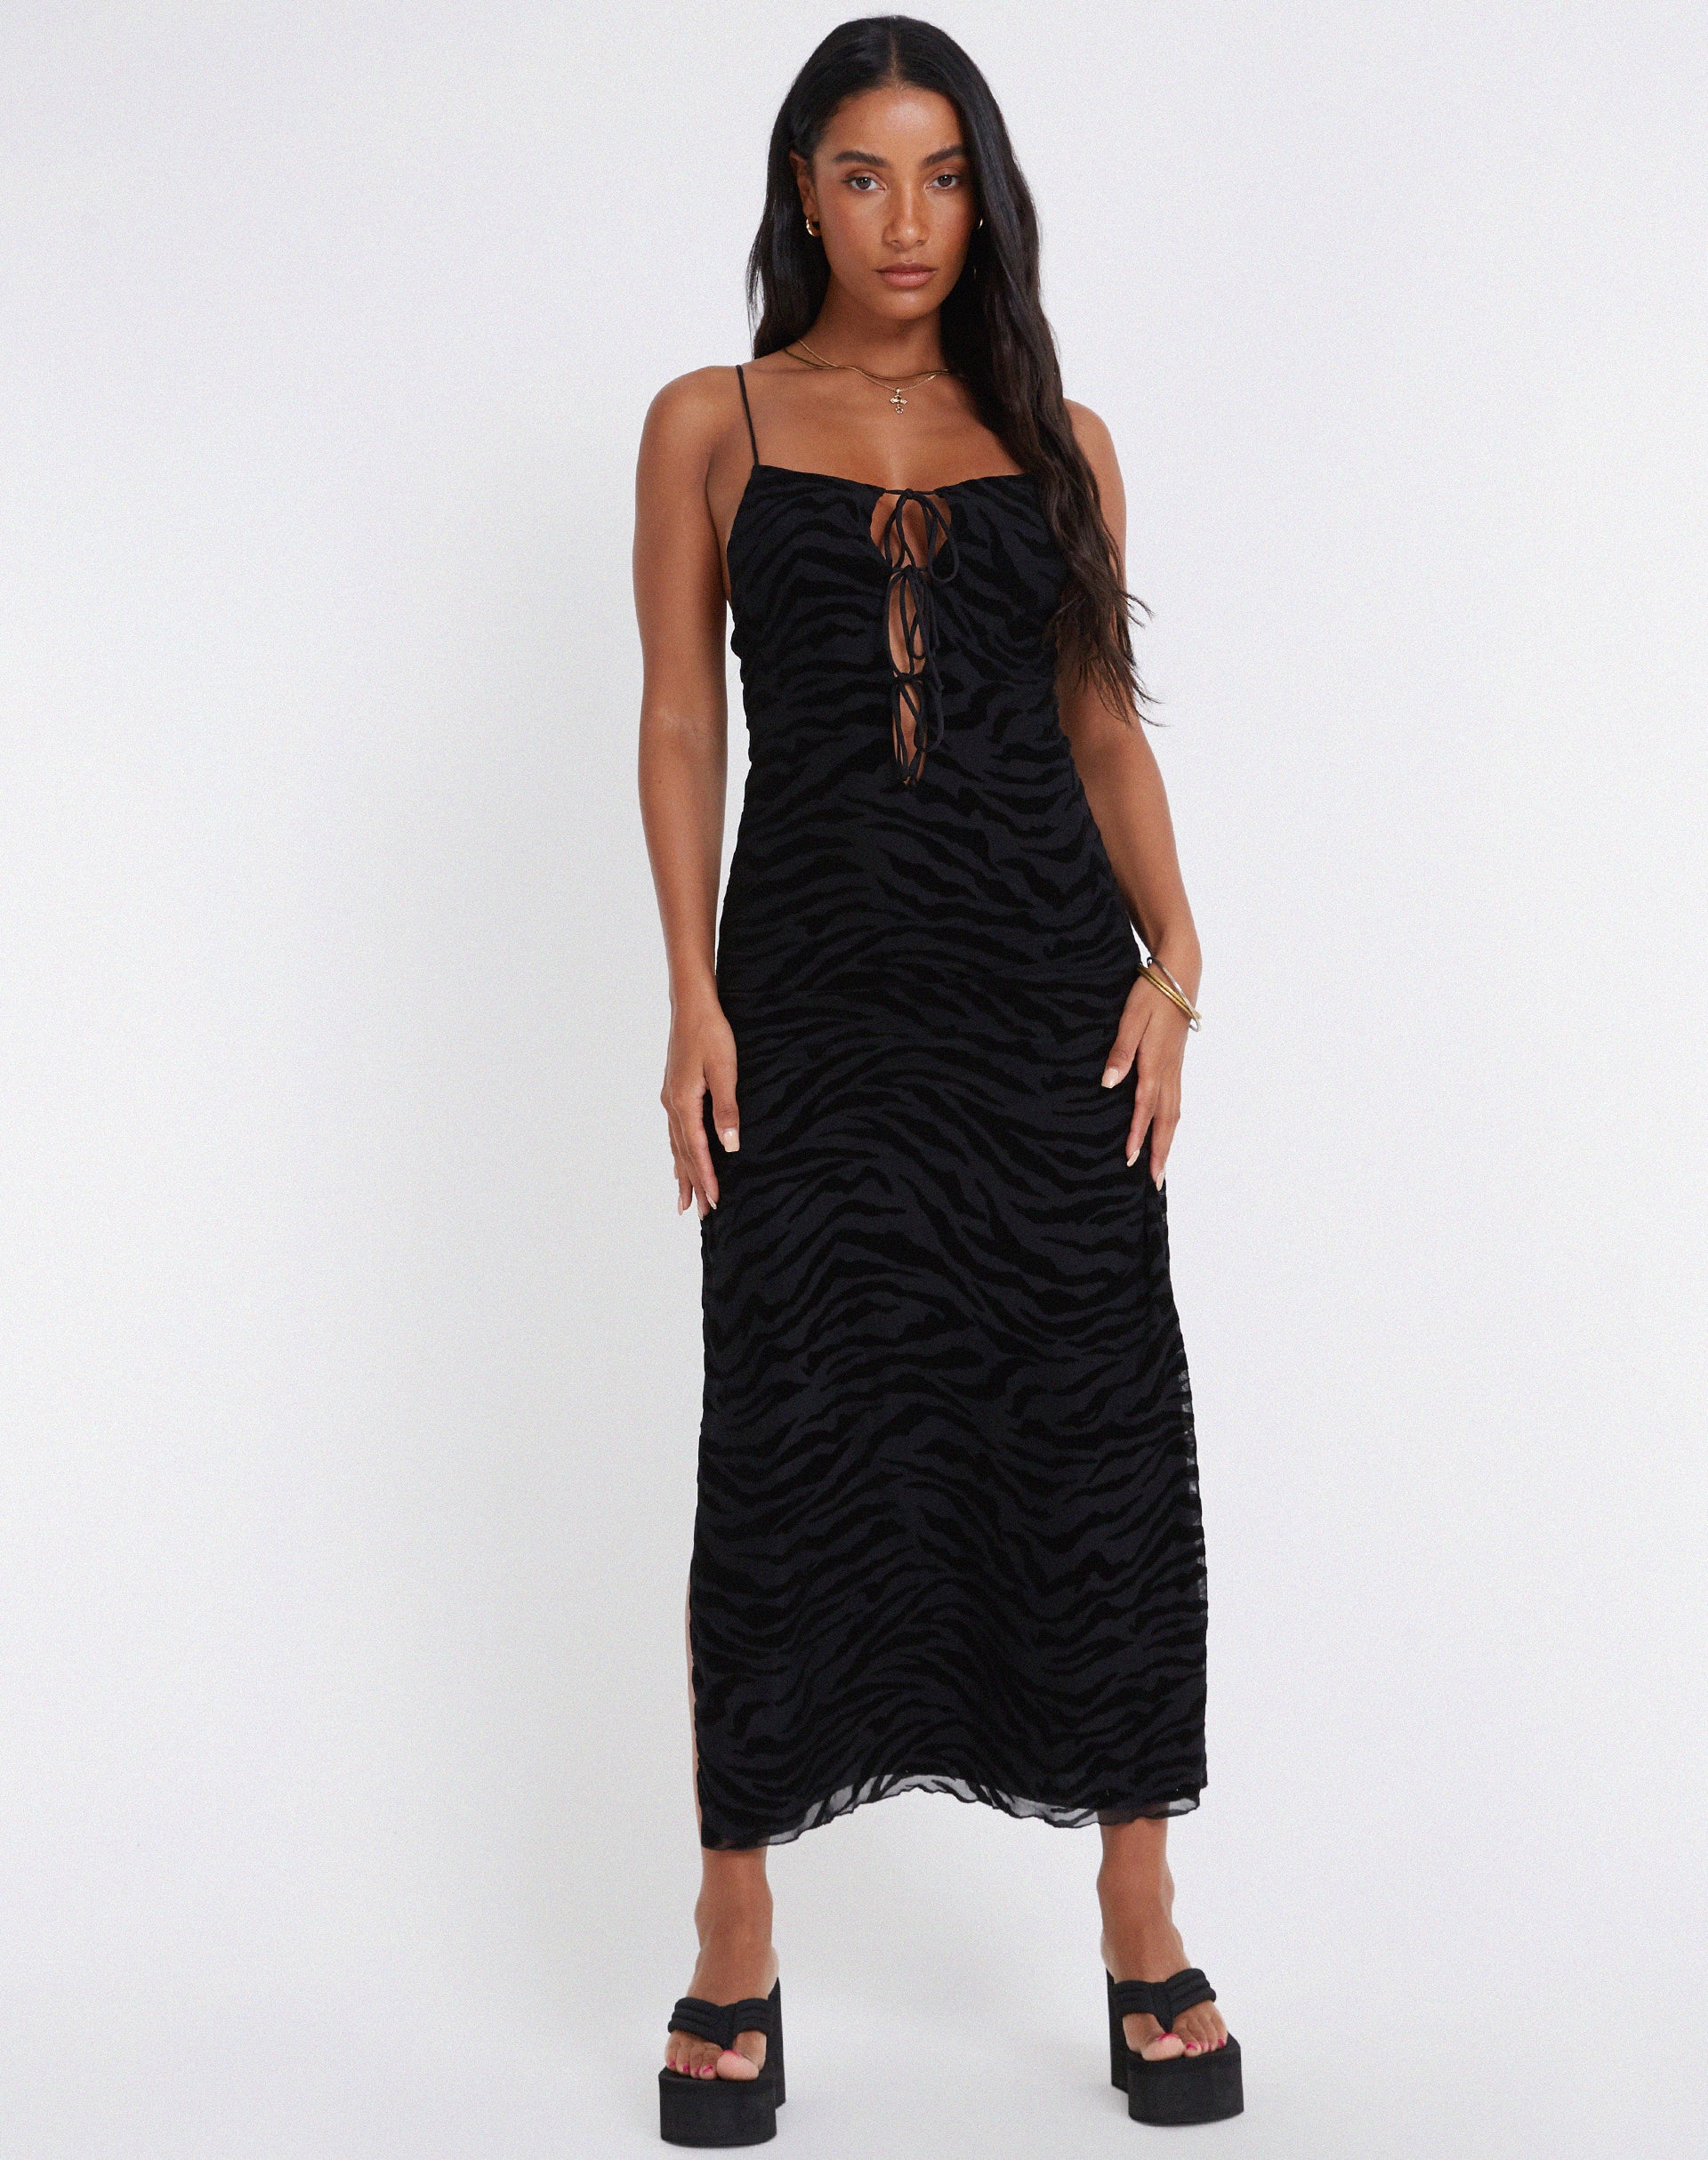 image of Rayuma Maxi Dress in Zebra Flock Black